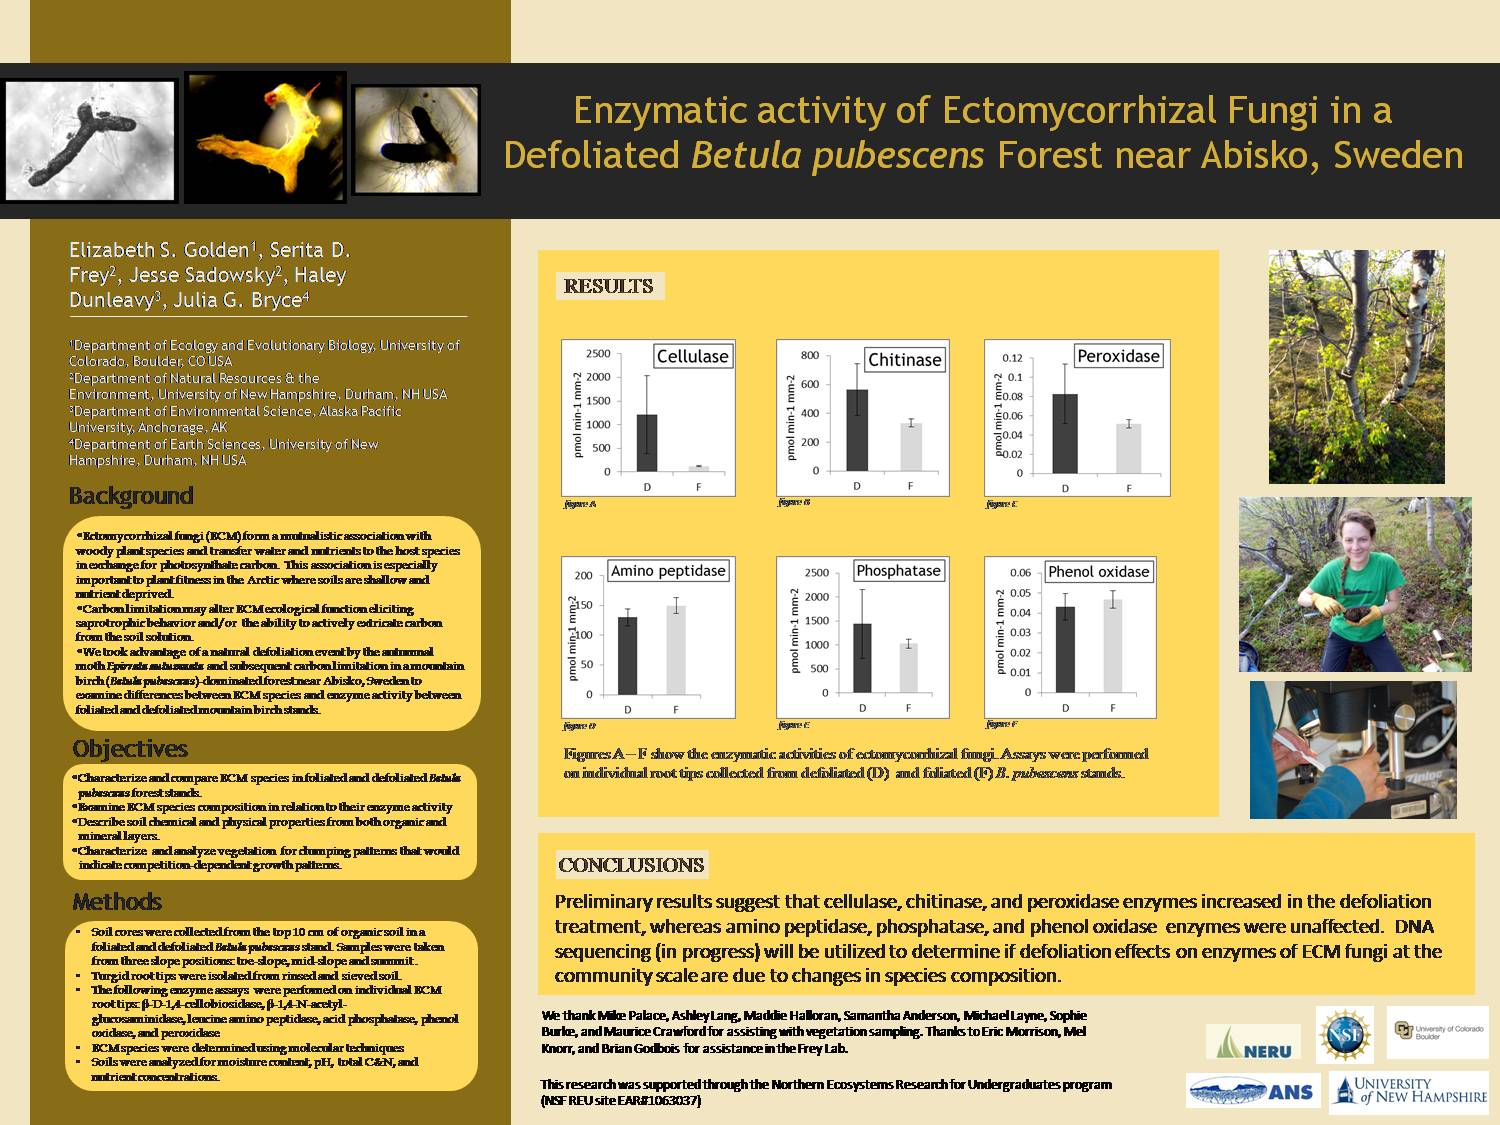 Enzymatic Activity Of Ectomycorrhizal Fungi In A  Defoliated Betula Pubescens Forest Near Abisko, Sweden  by elimaygolden